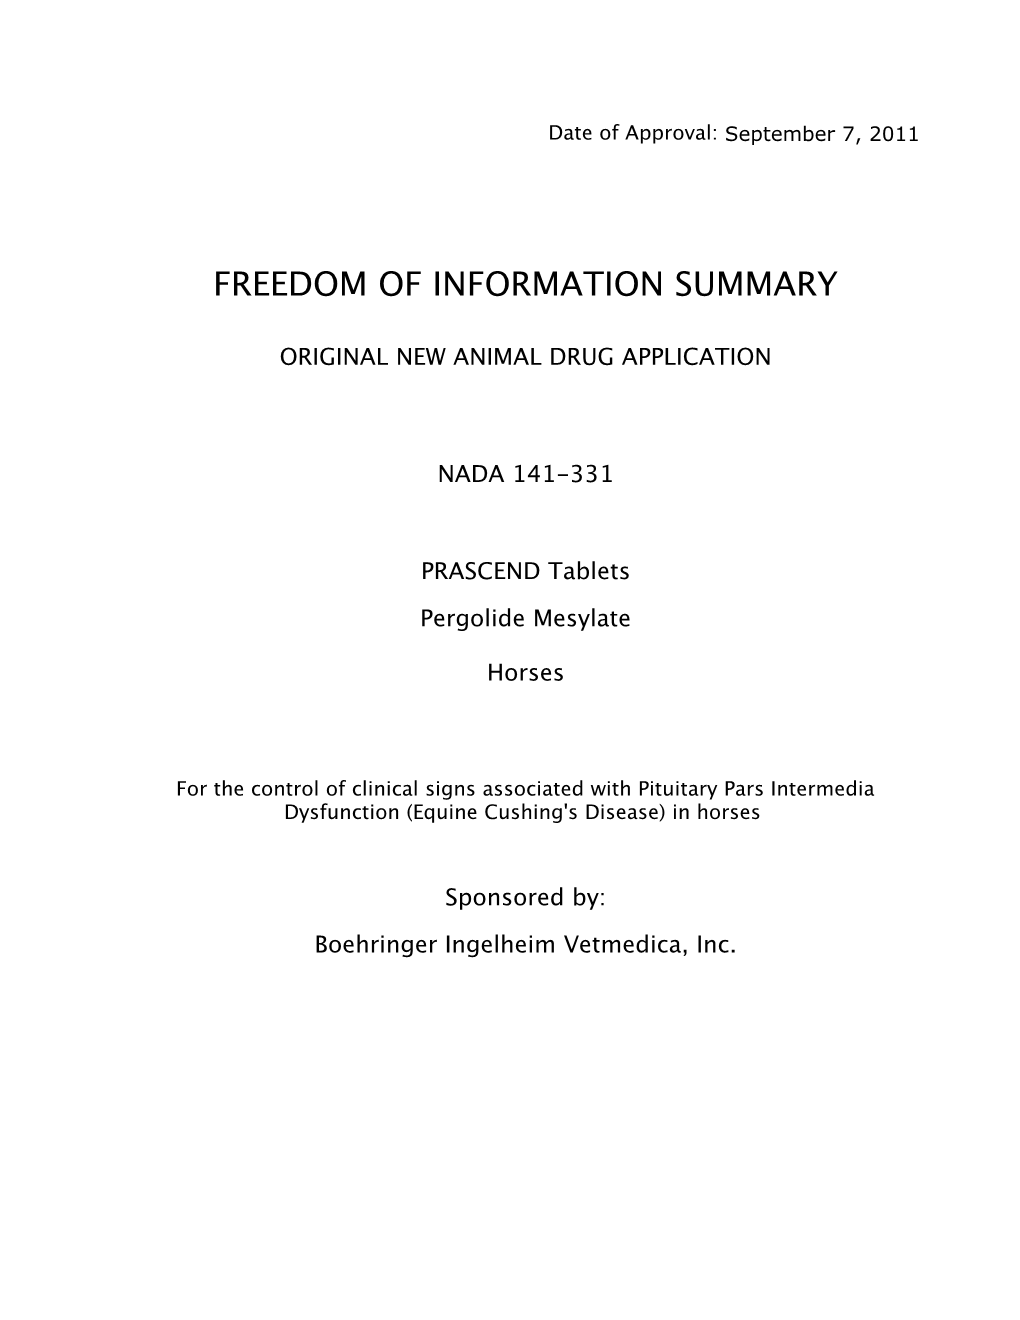 Freedom of Information Summary